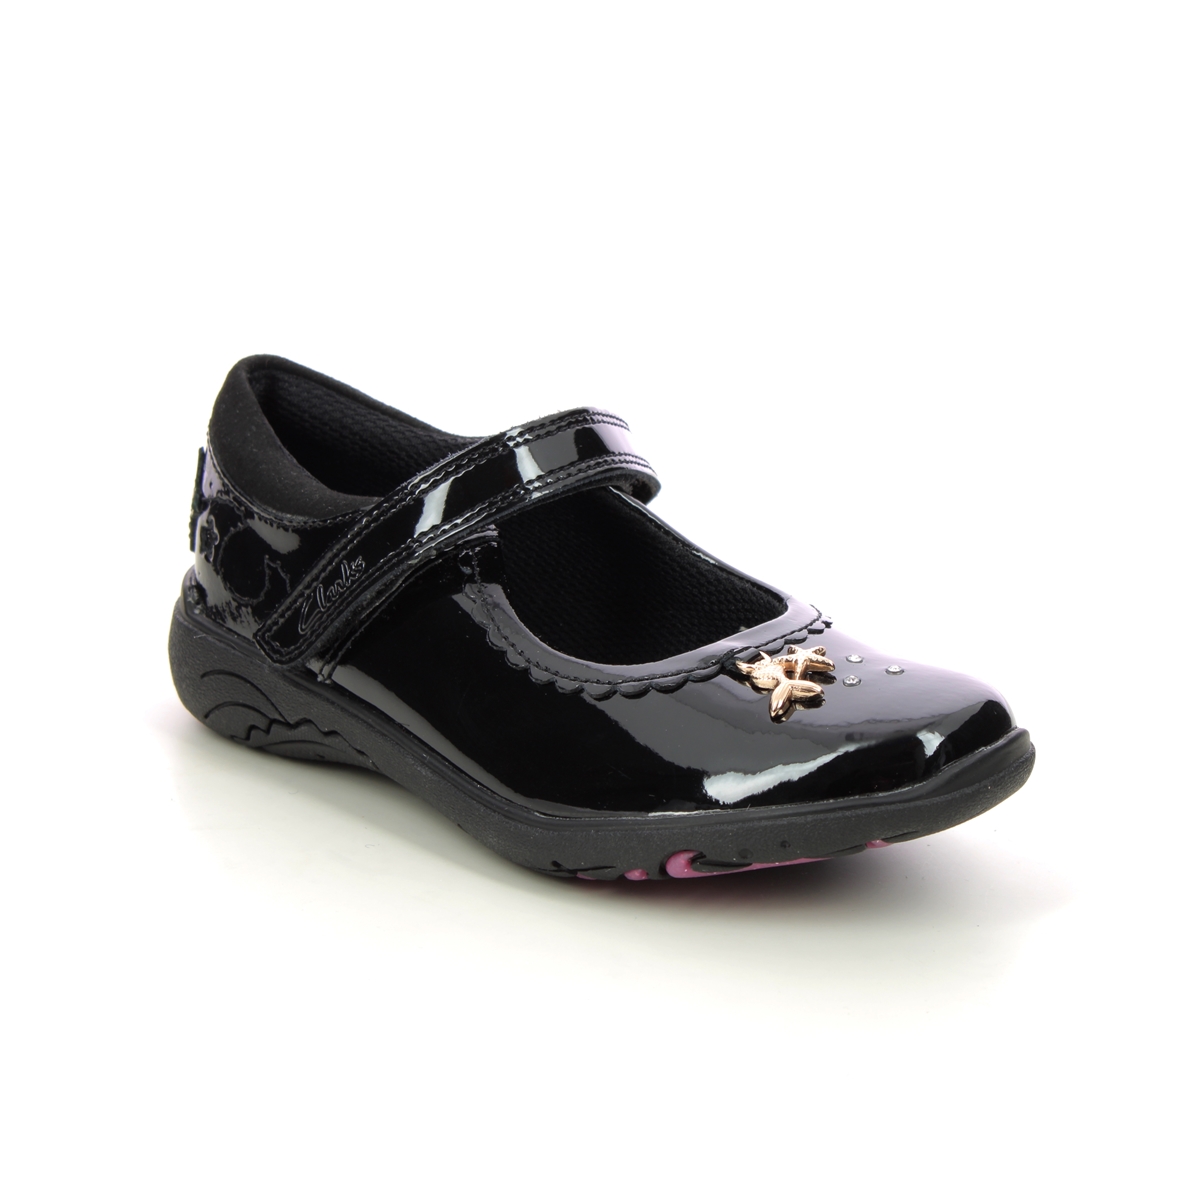 Clarks Relda Sea K Mary Jane Black Patent Kids Girls School Shoes 722416F In Size 13.5 In Plain Black Patent F Width Fitting Regular Fit For School Fo